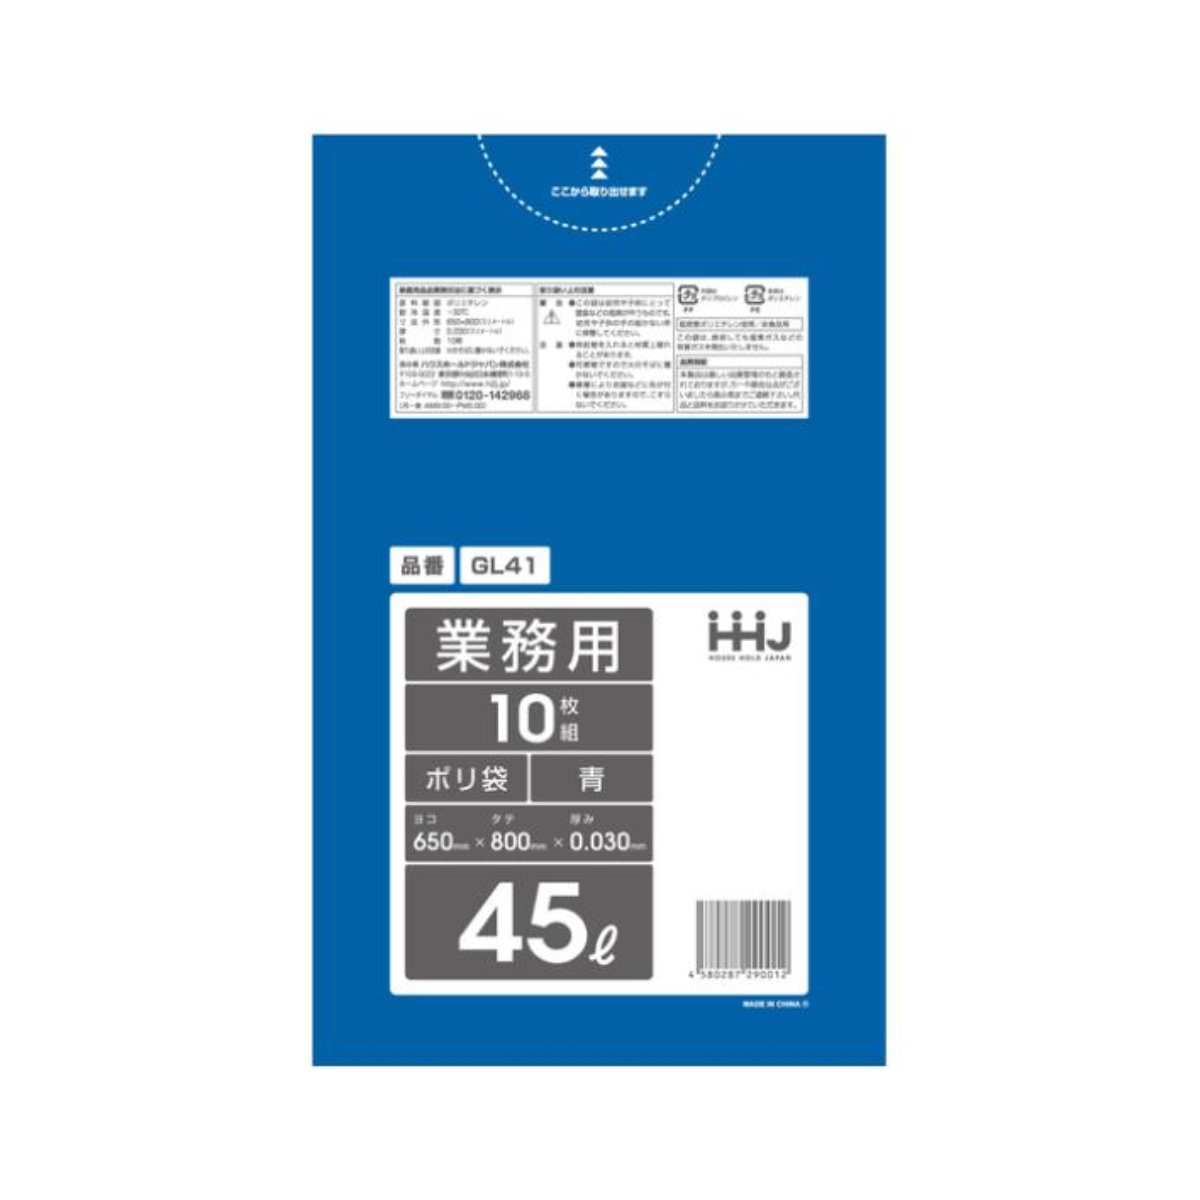 UF多分別回収カート (袋) 120L 灰/61-4465-55 半価販売 材料、部品